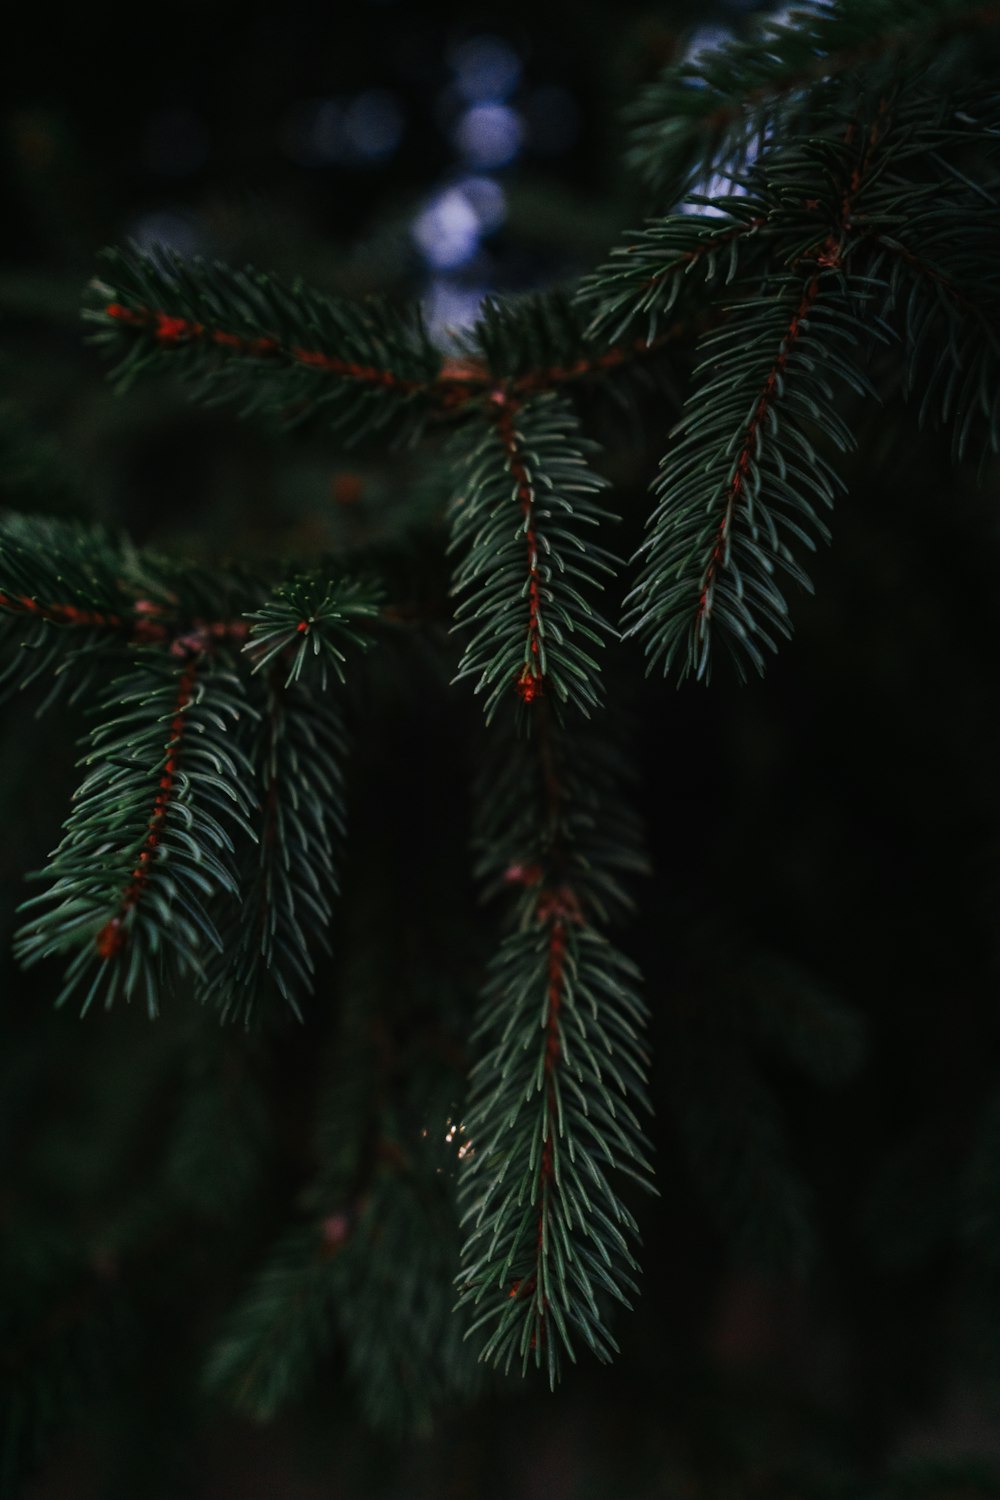 a close up of a pine tree